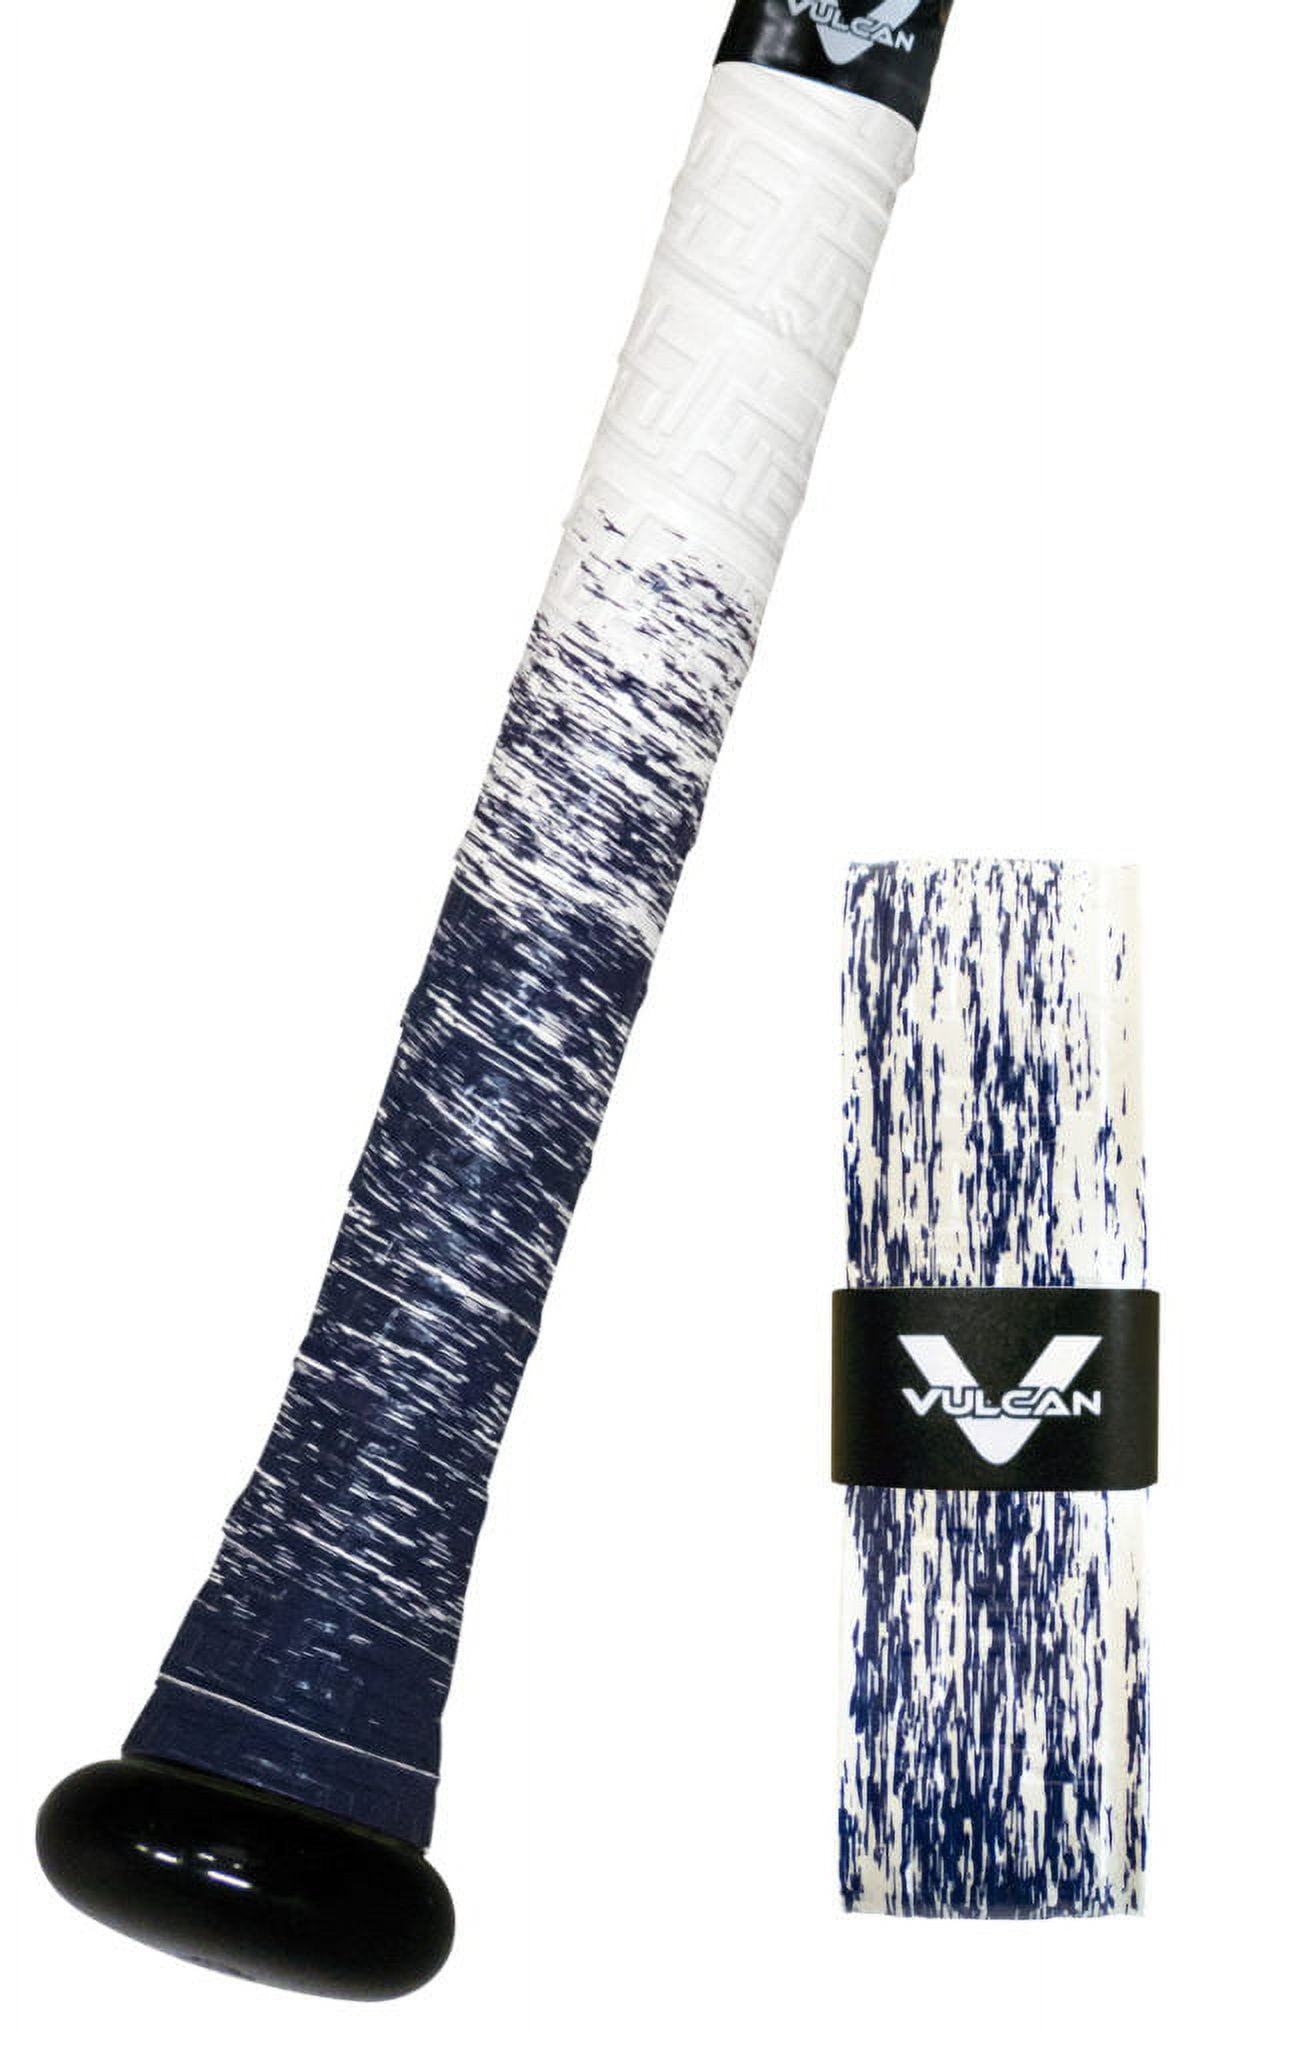 Blue Bat Grip Tape  Blue Bat Grip with Black Designs – VukGripz